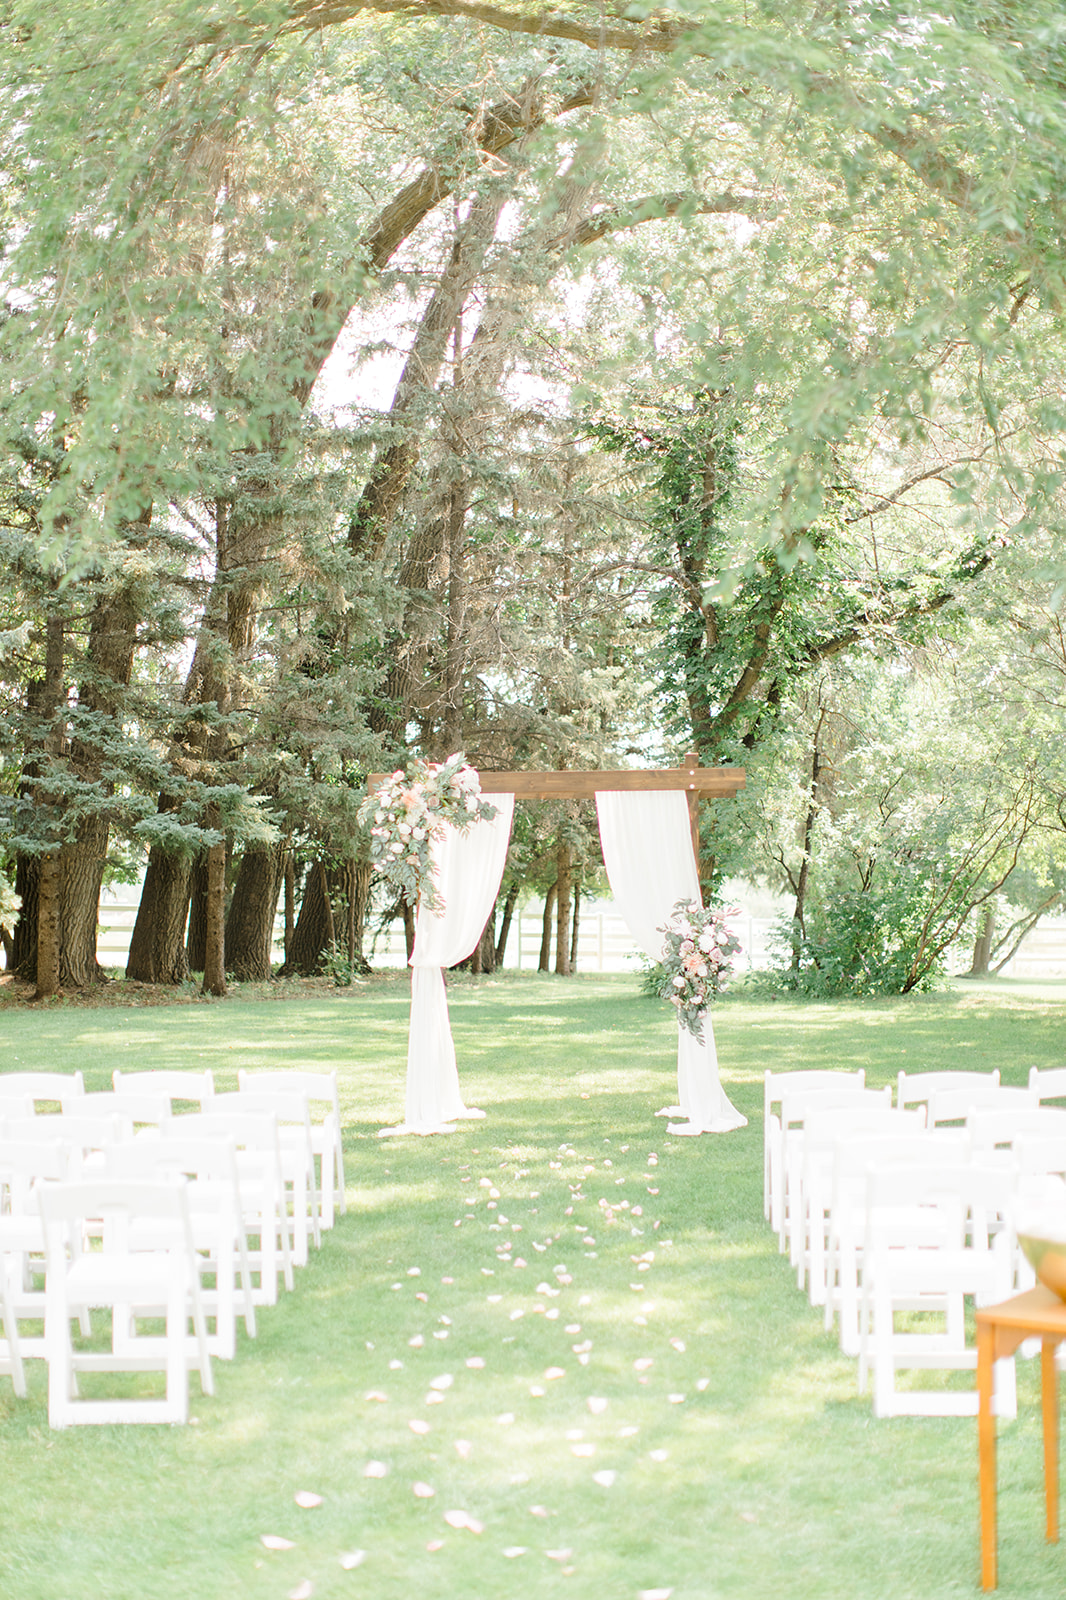 Outdoor wedding setup, outdoor summer wedding, estate wedding inspiration, blush and greenery, wedding archway